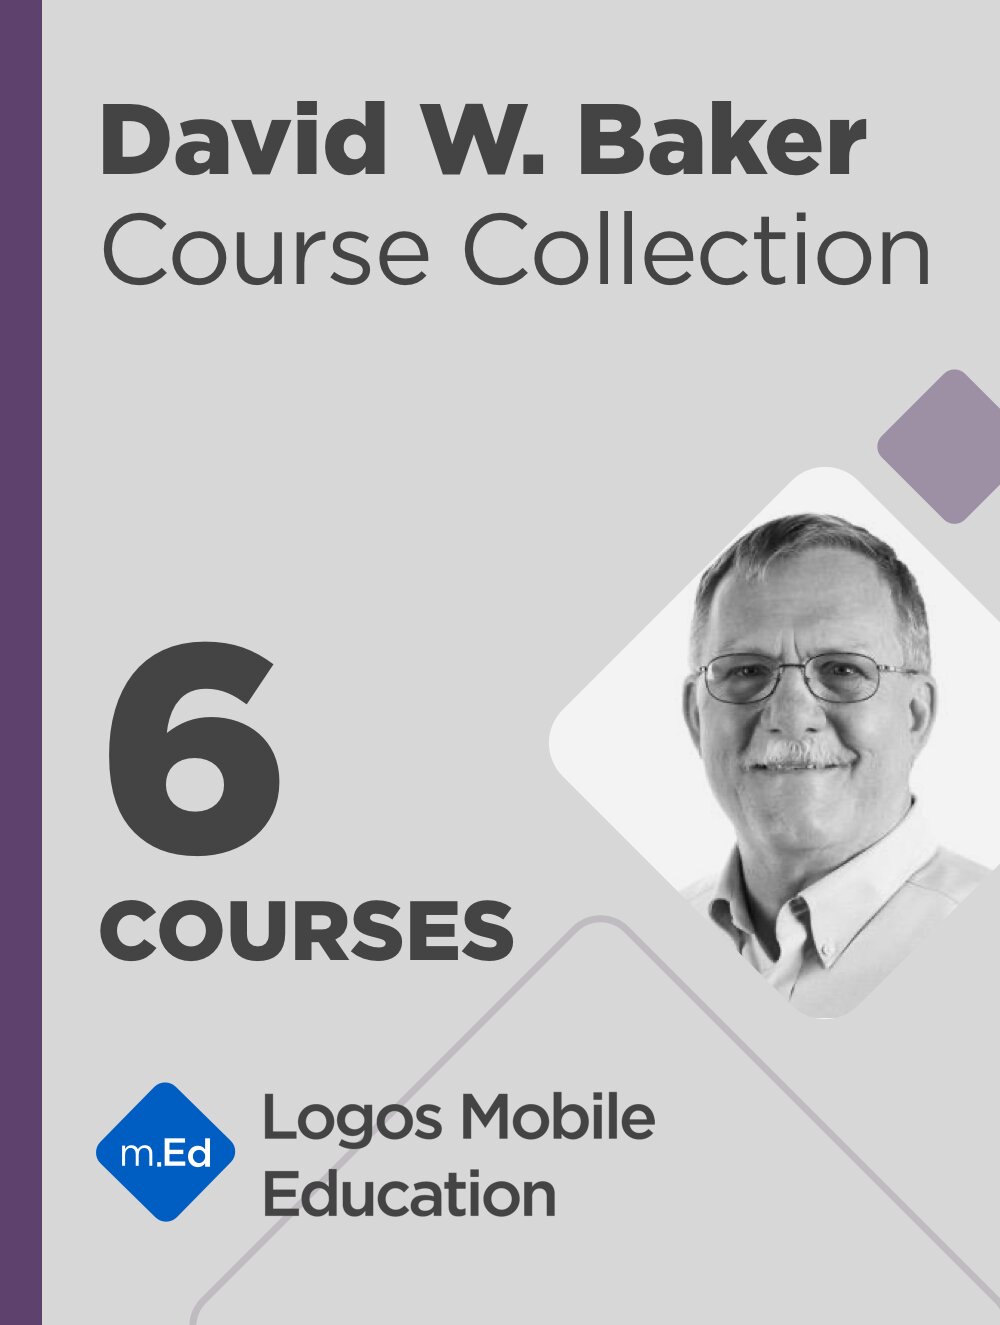 David W. Baker Course Collection (6 courses)